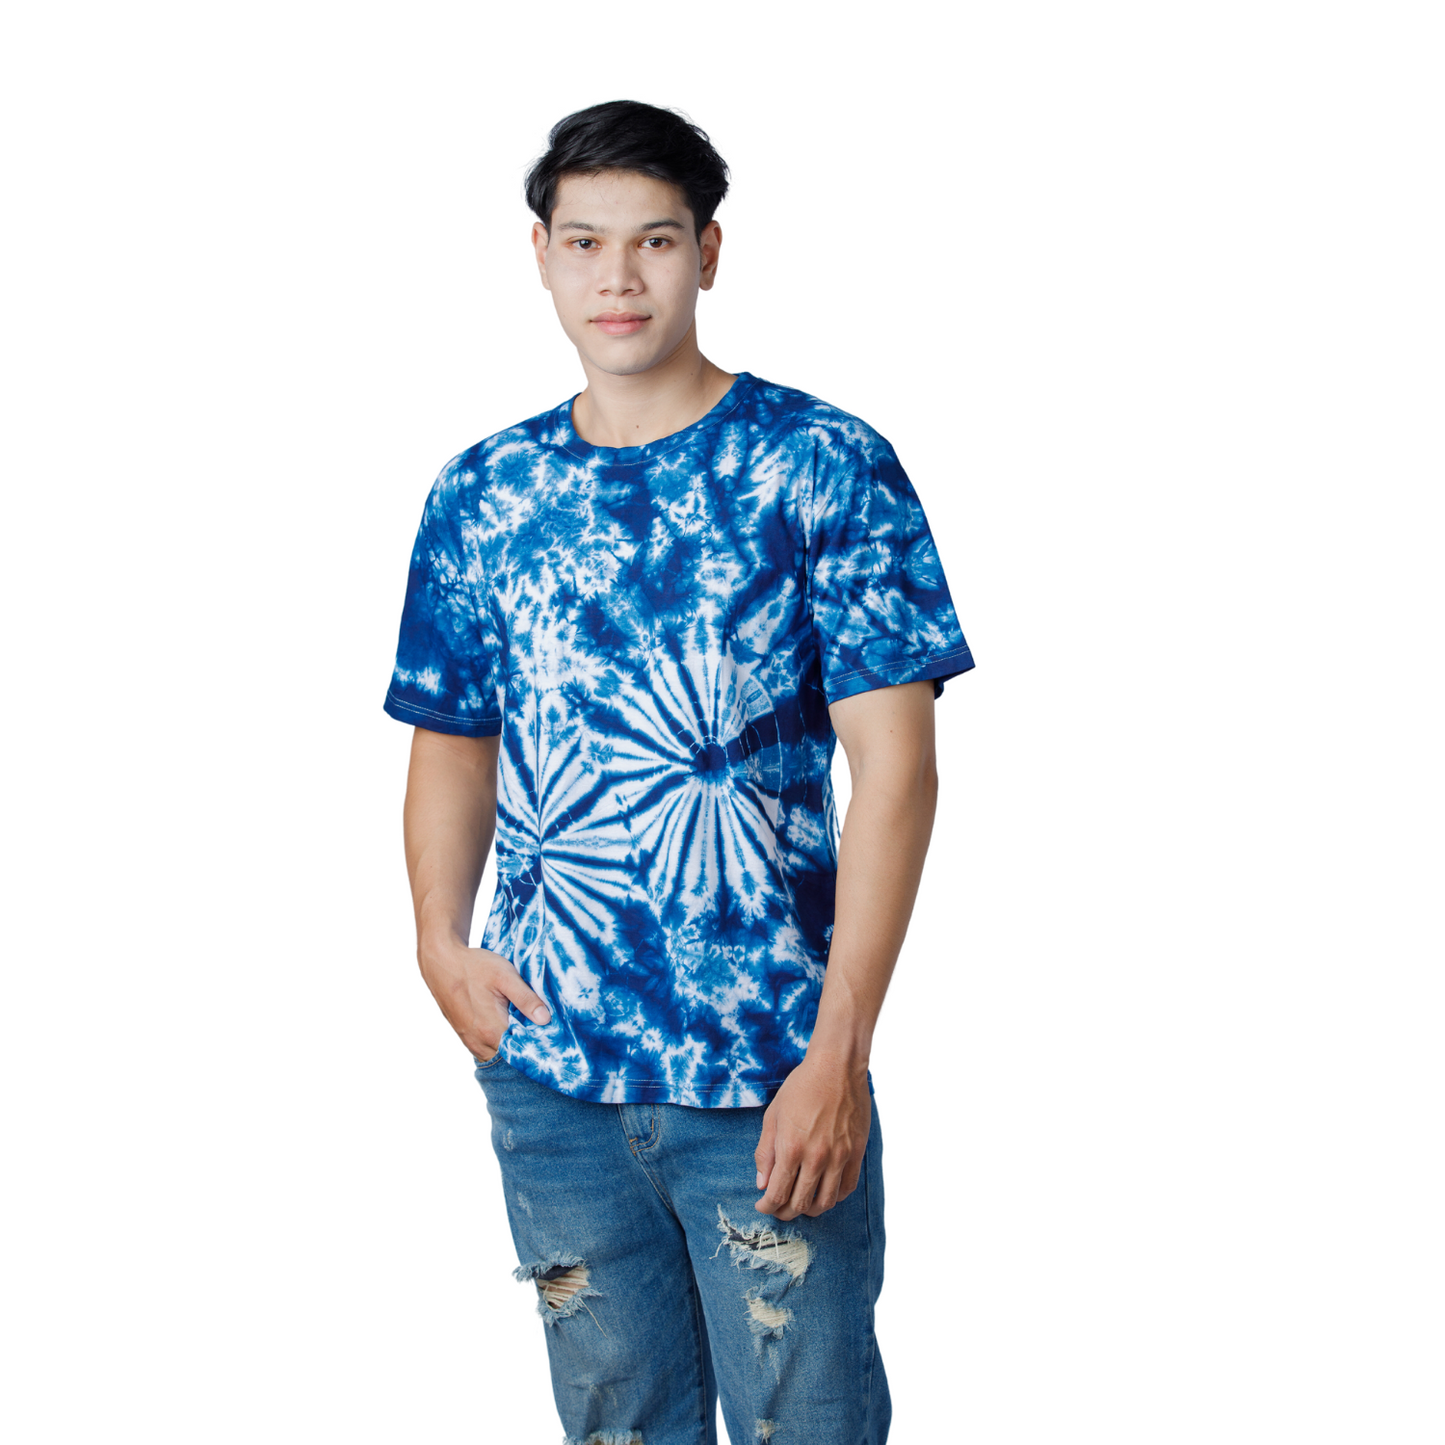 Tie Dye T Shirts for Men Women Teens - Short Sleeve Round Neck | 100% Cotton Shirt | Casual Summer Tee Tops